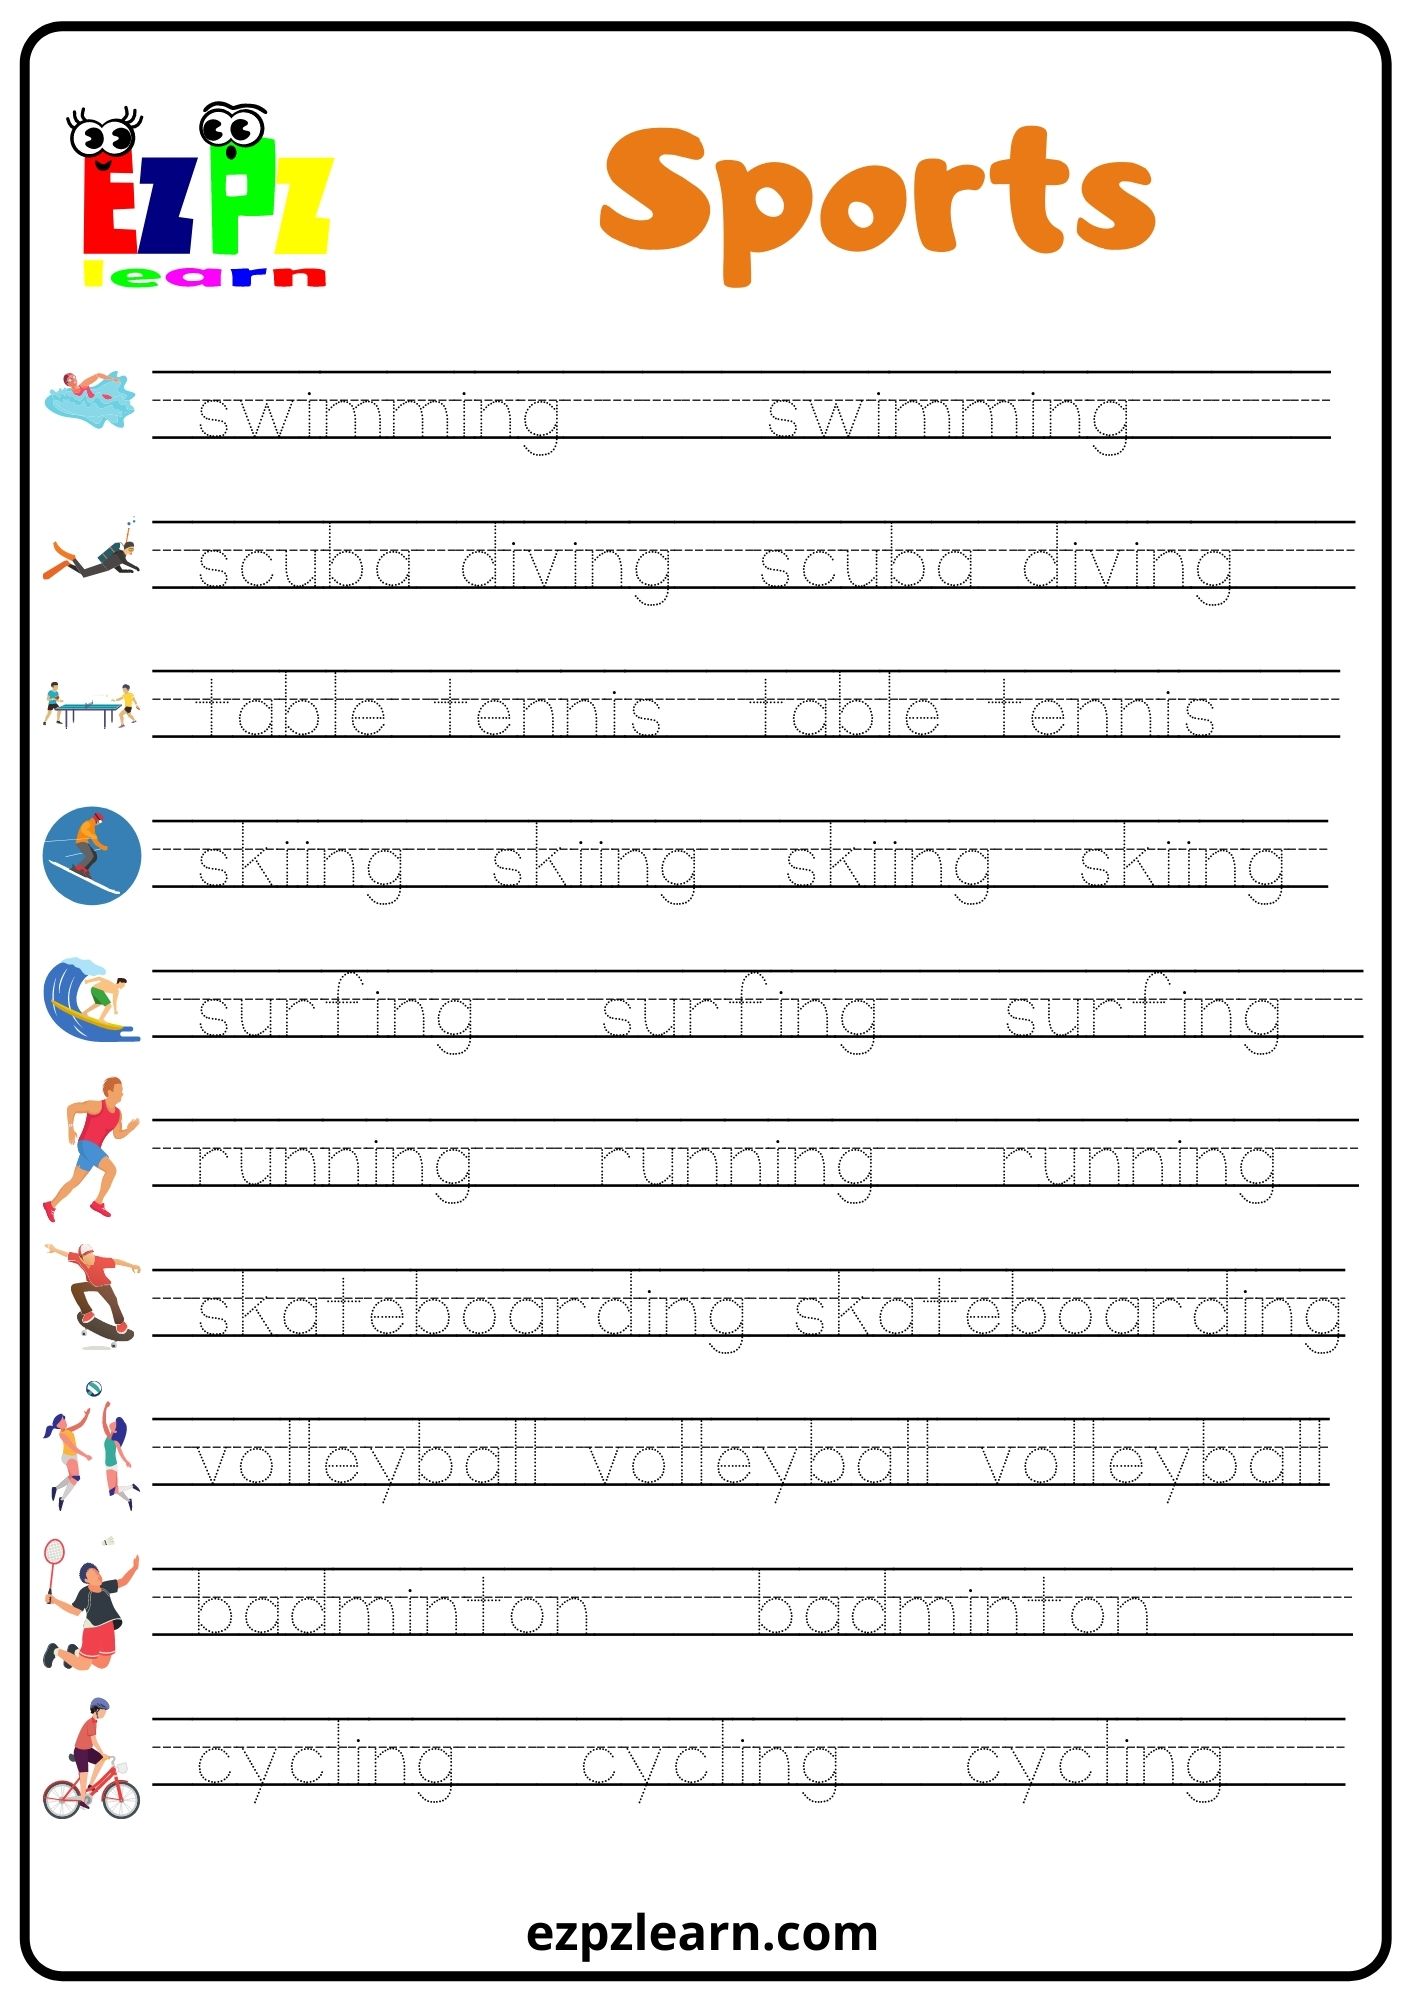 sports set1 word tracing worksheet ezpzlearn com